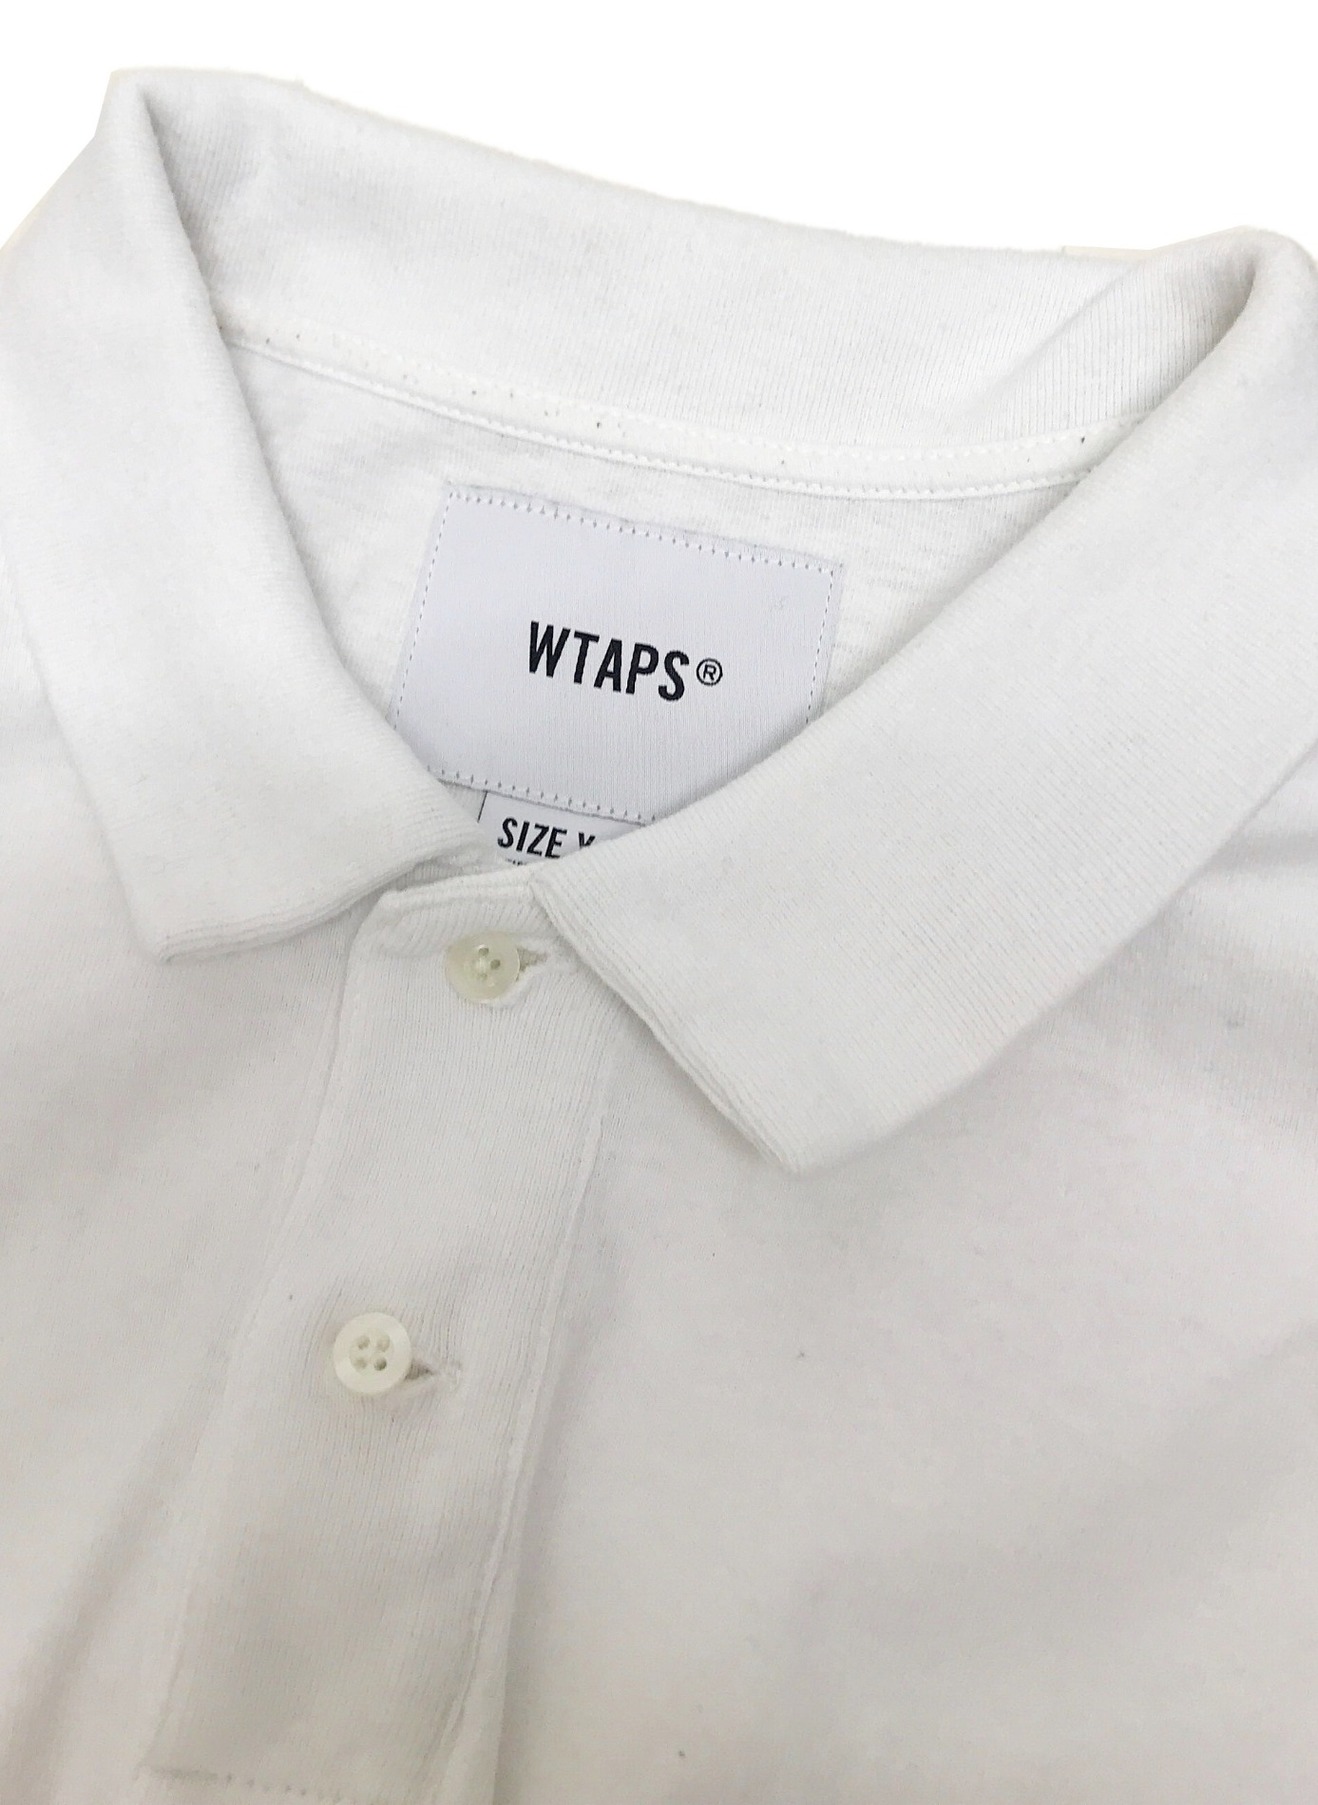 WTAPS (ダブルタップス) POLO SS 03 USA SHIRT ポロシャツ ホワイト サイズ:01